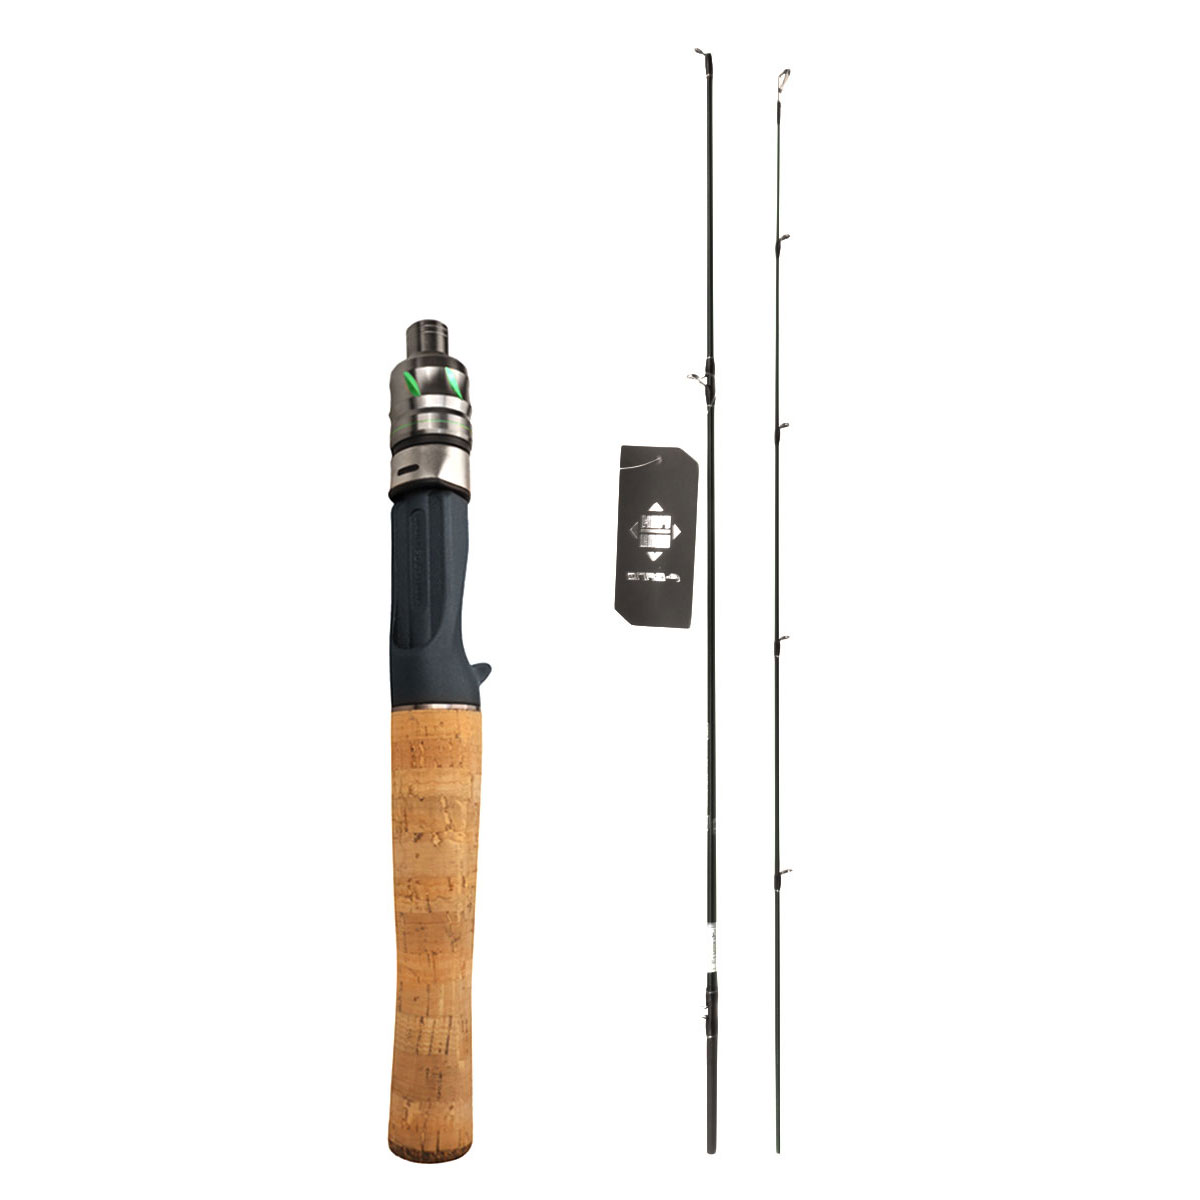 1.28M Fishgung UL Travel Fishing Rod Ultra Light Fishing Rod